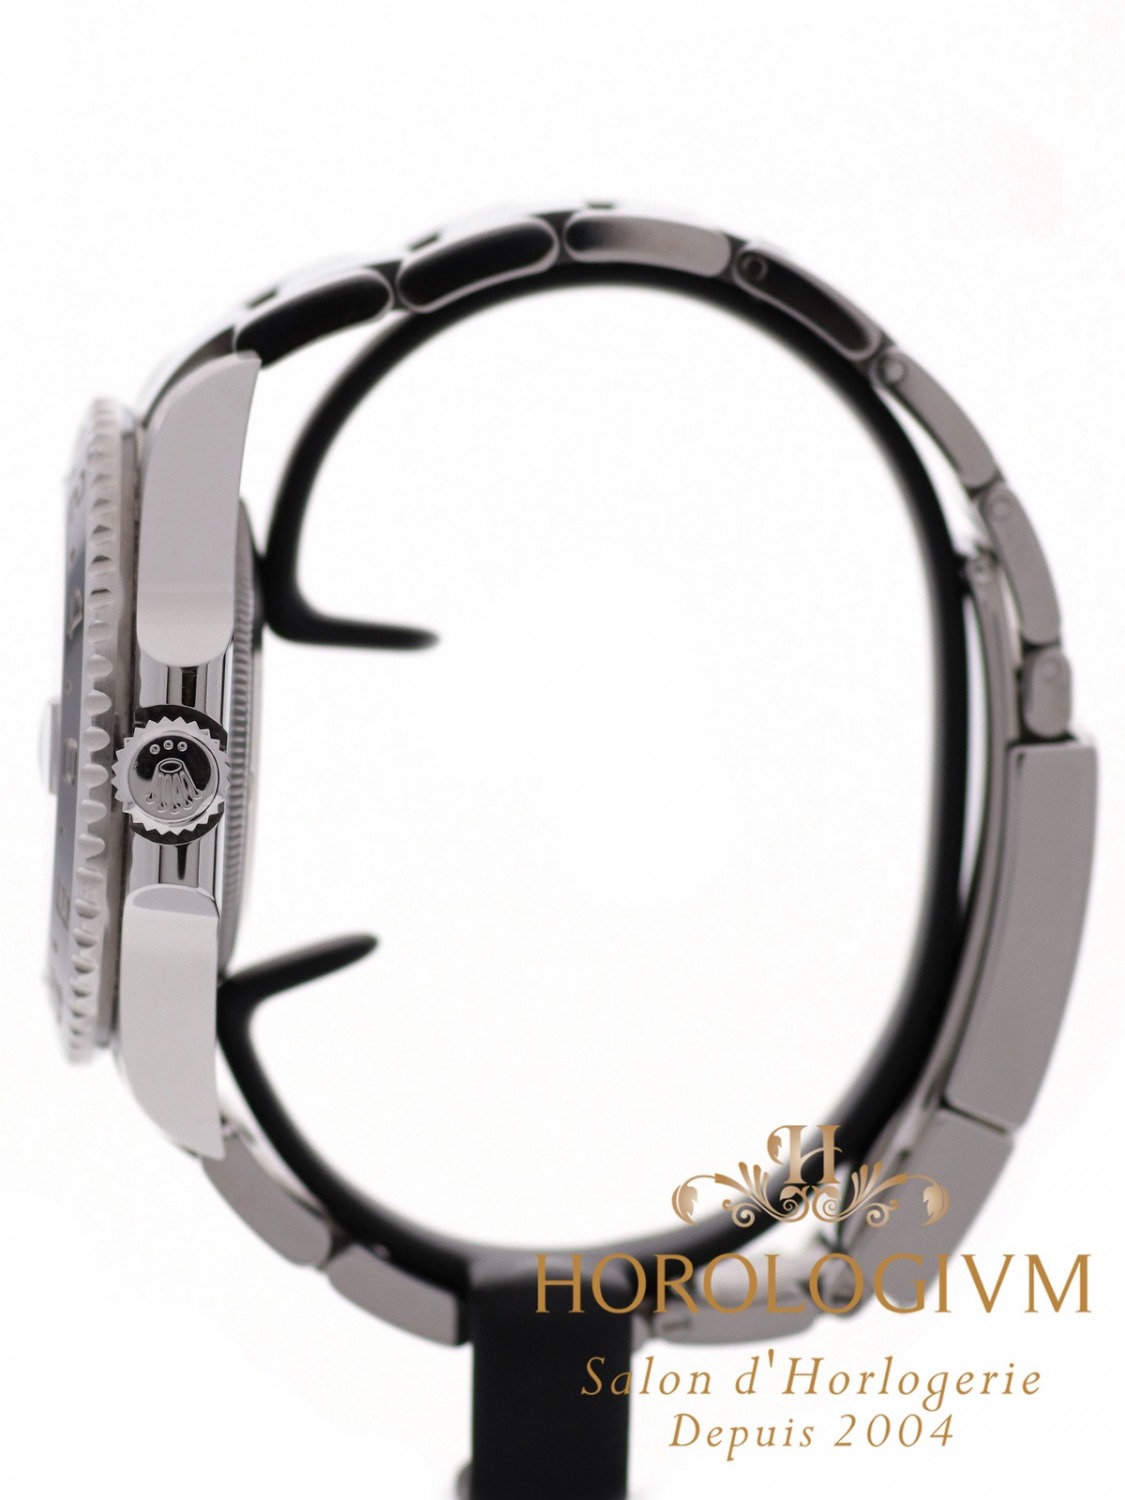 Rolex GMT Master II “random serial” watch, silver (case) and black (bezel)